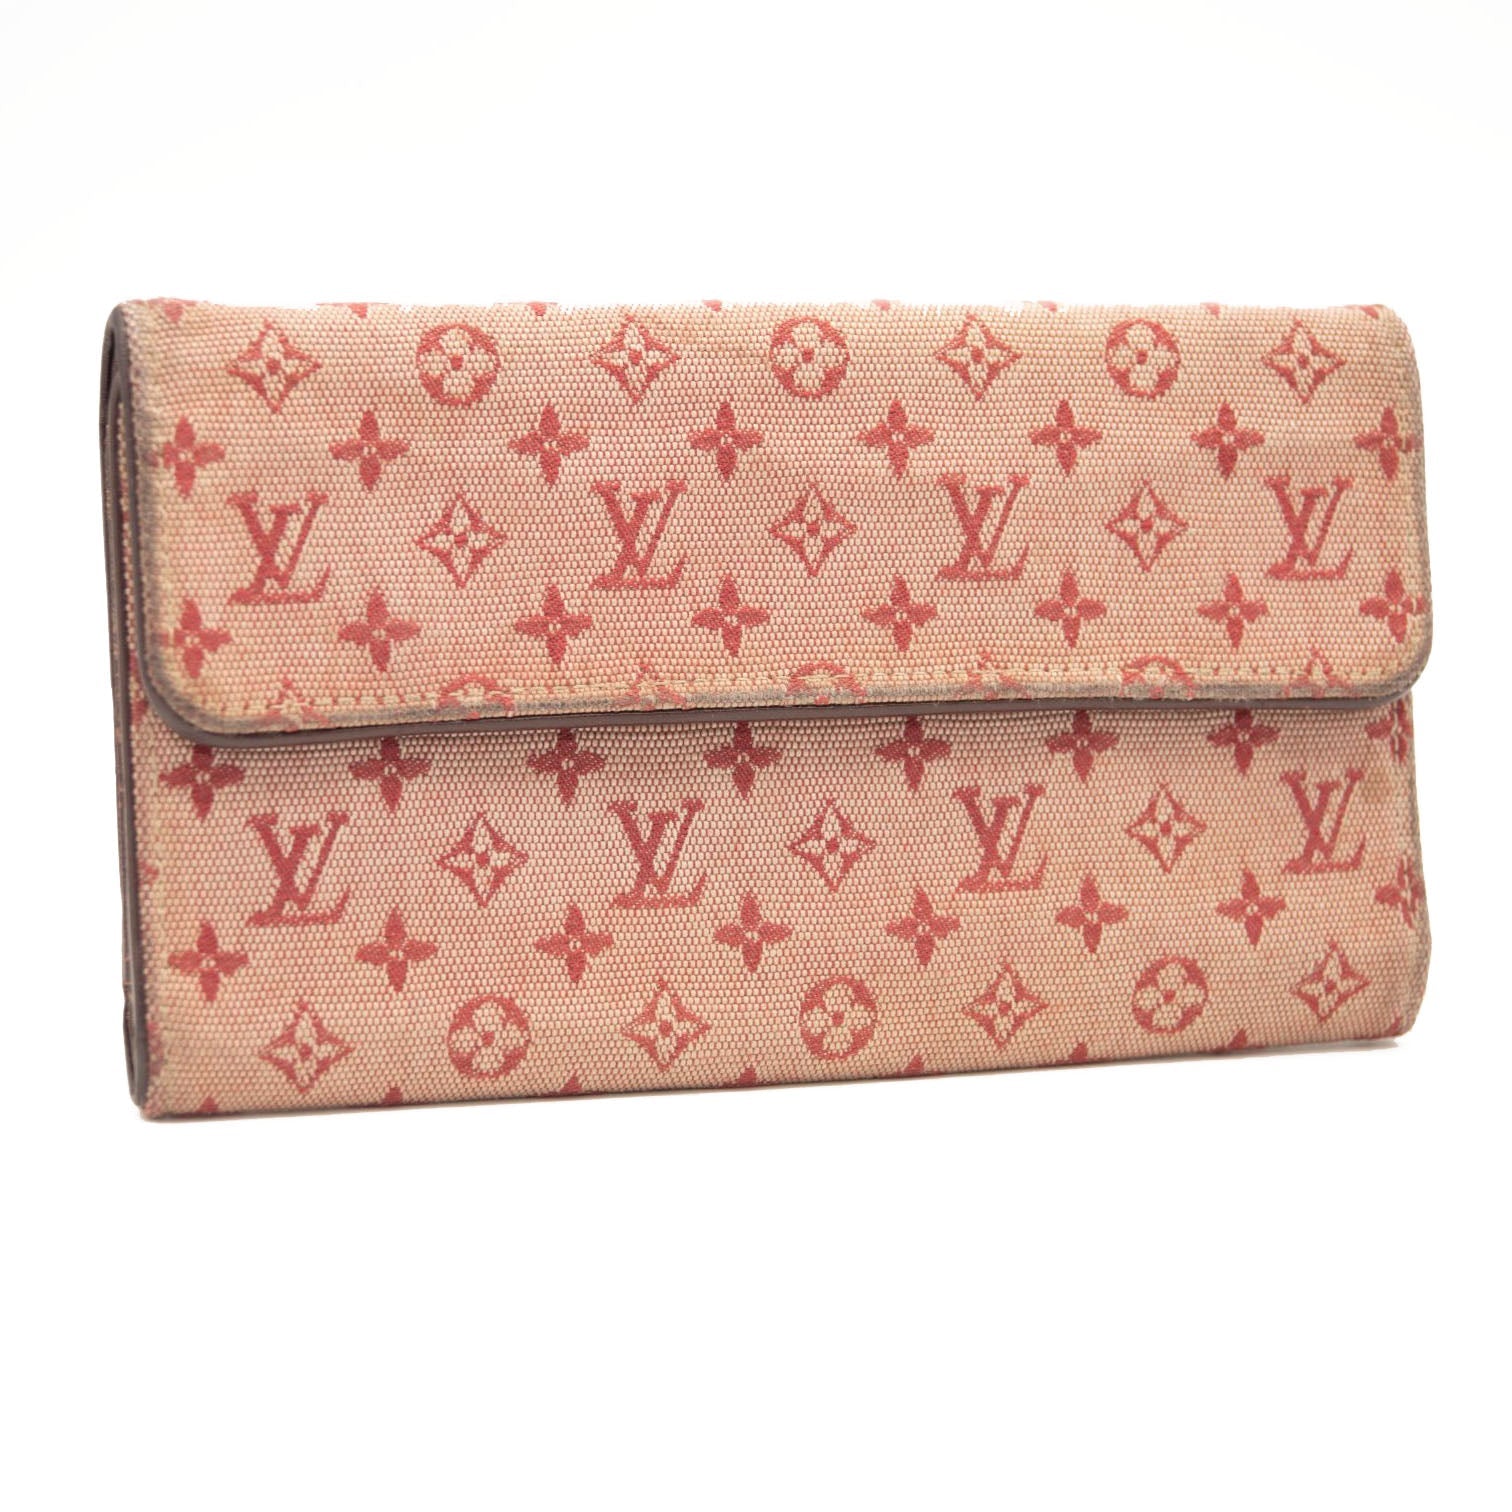 Louis Vuitton Tresor Monogram Wallet